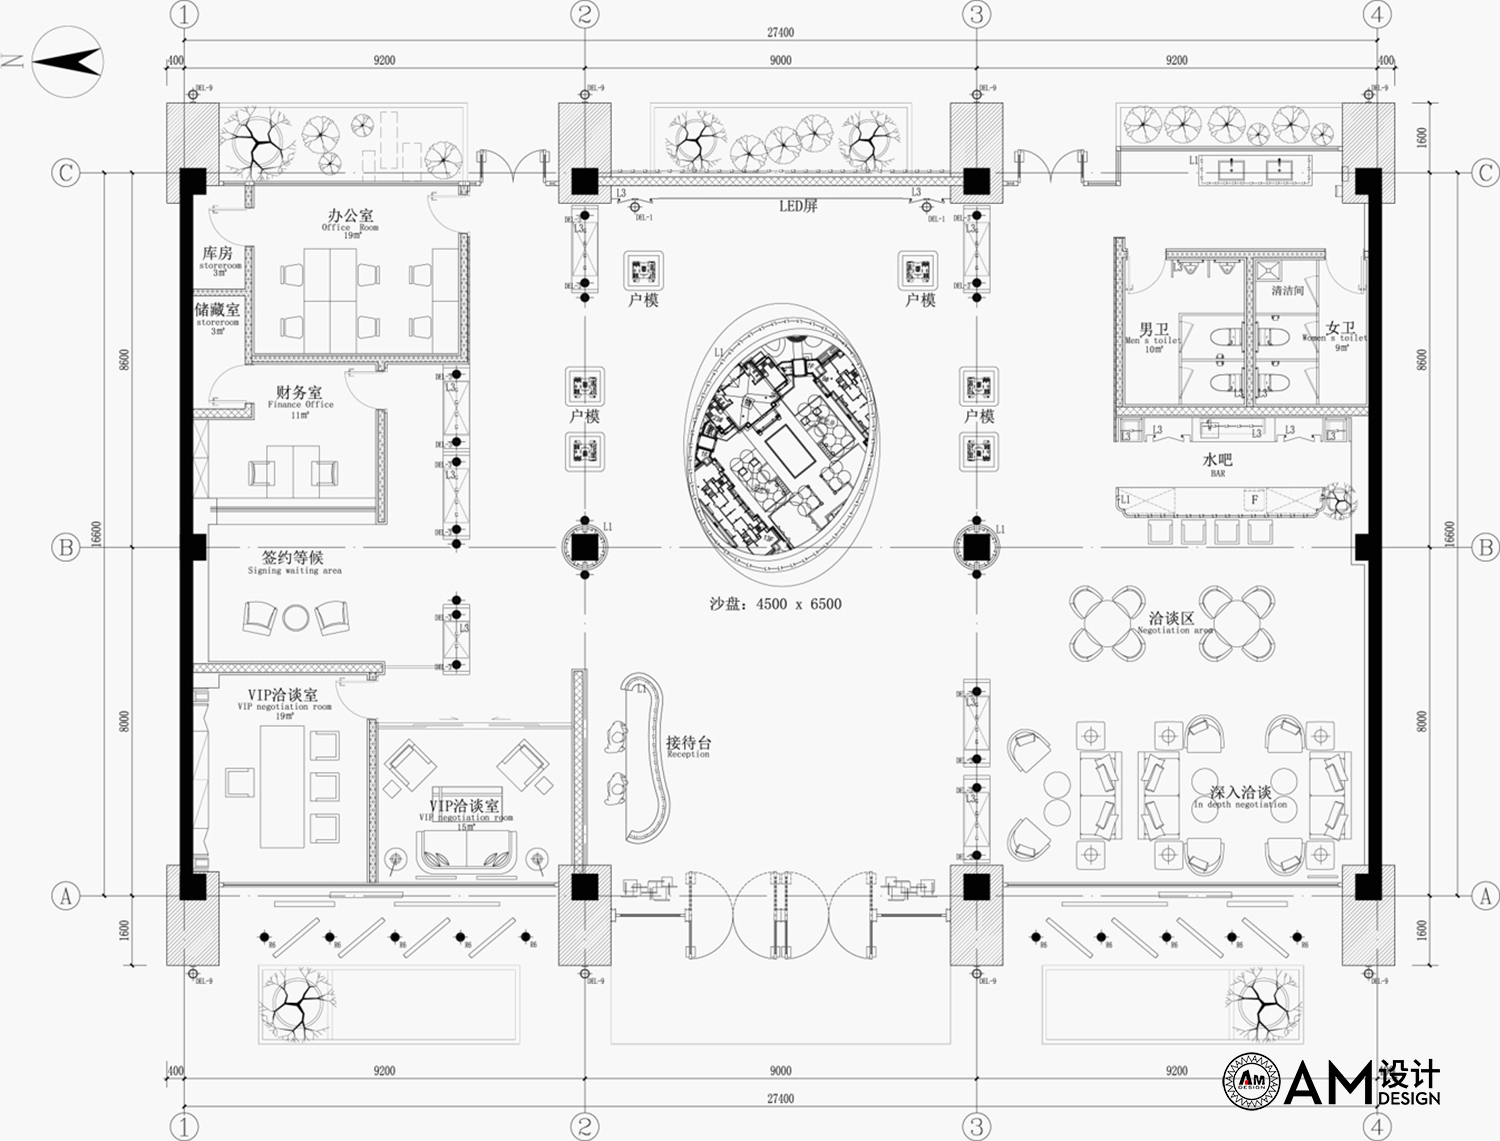 AM | design plan of Huafu Sales Office in Hanshui, Shaanxi